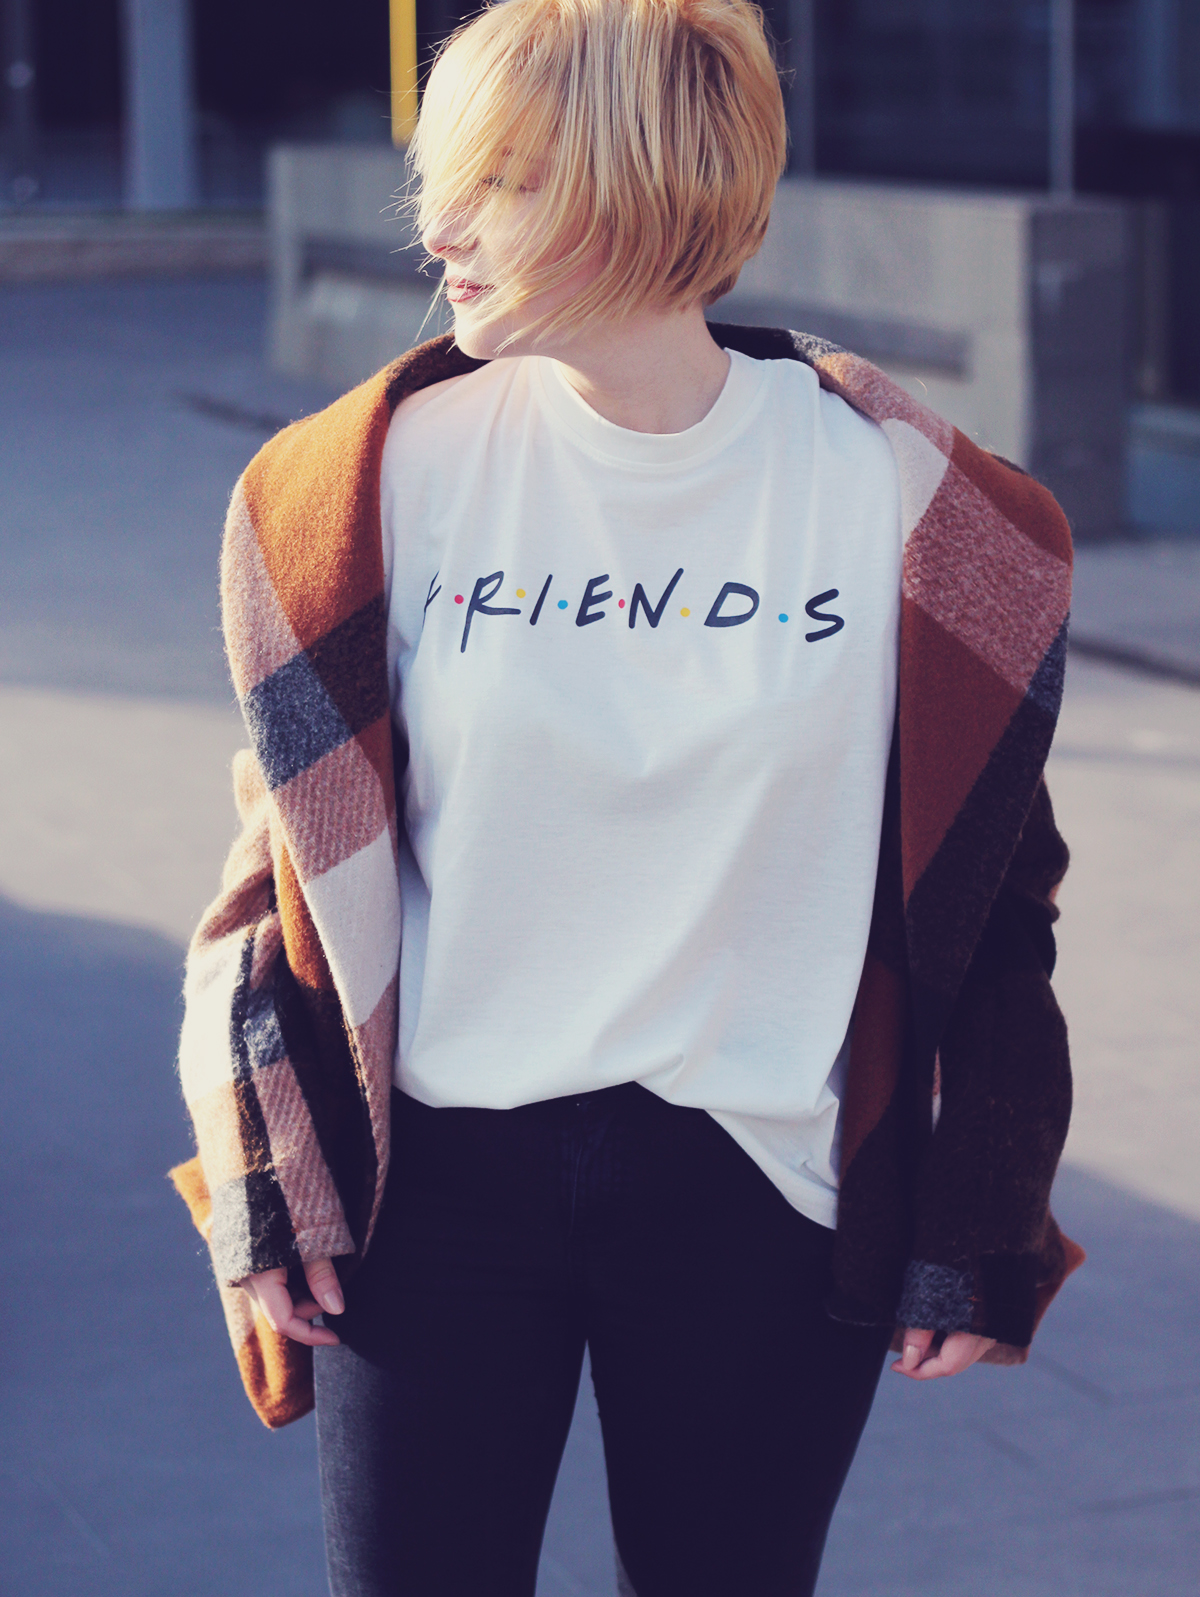 Friends t-shirt, plaid coat, short blonde bob, street, jeans, casual